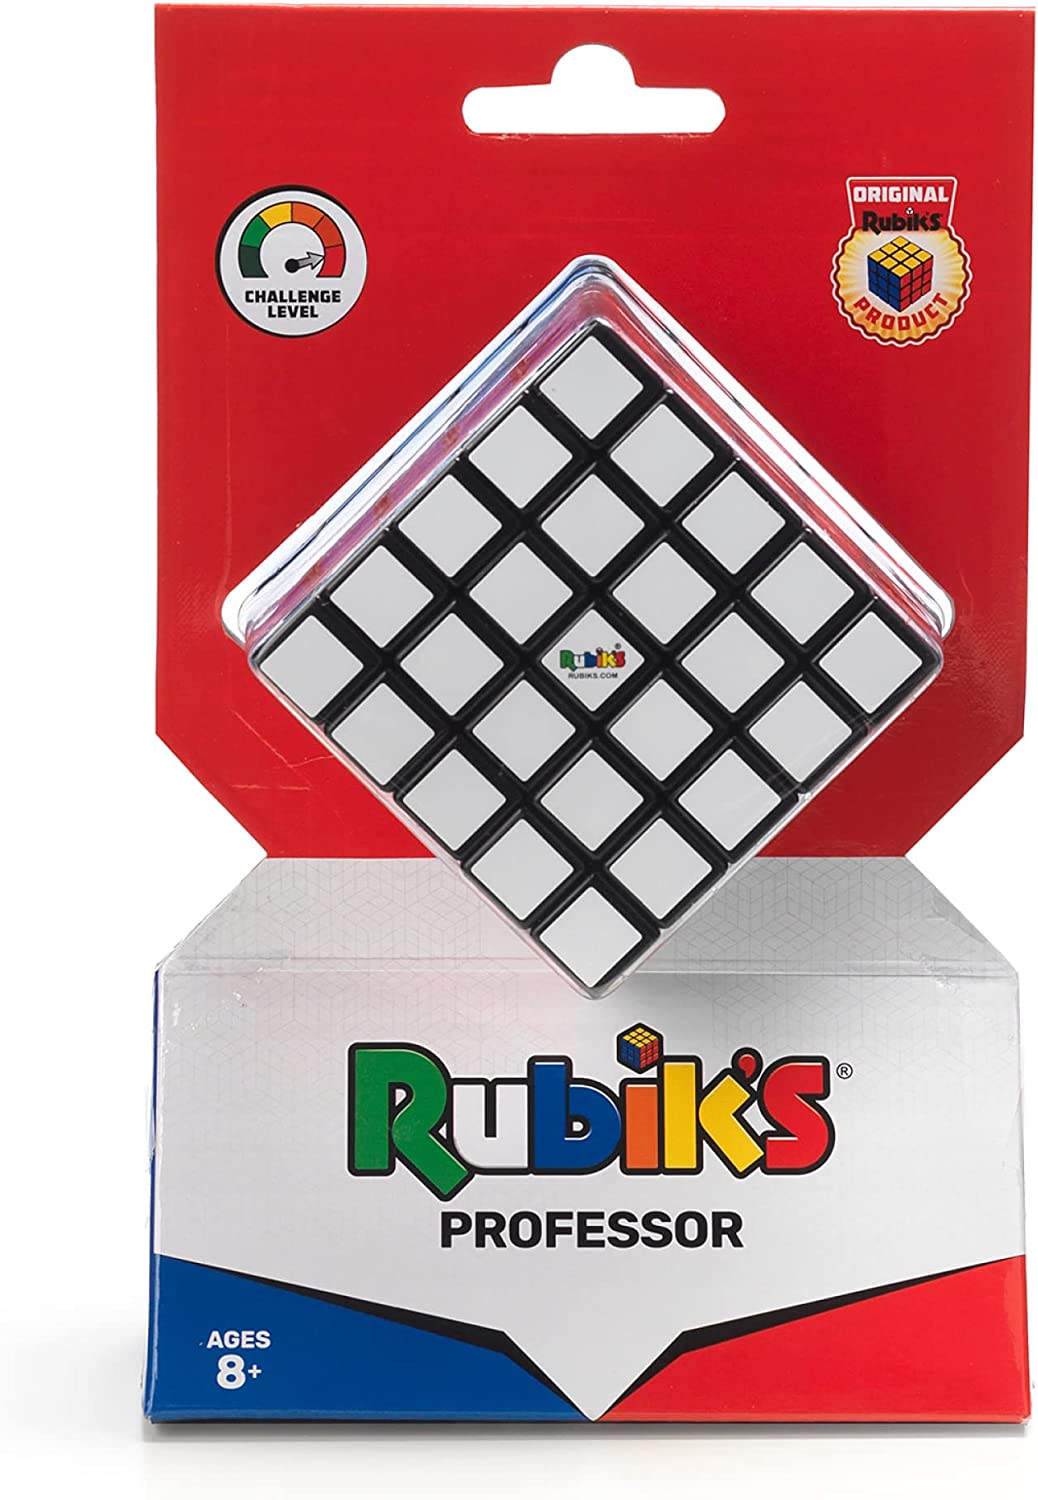 GAMES CUBO DI RUBIK / RUBIK'S CUBE (5X5)